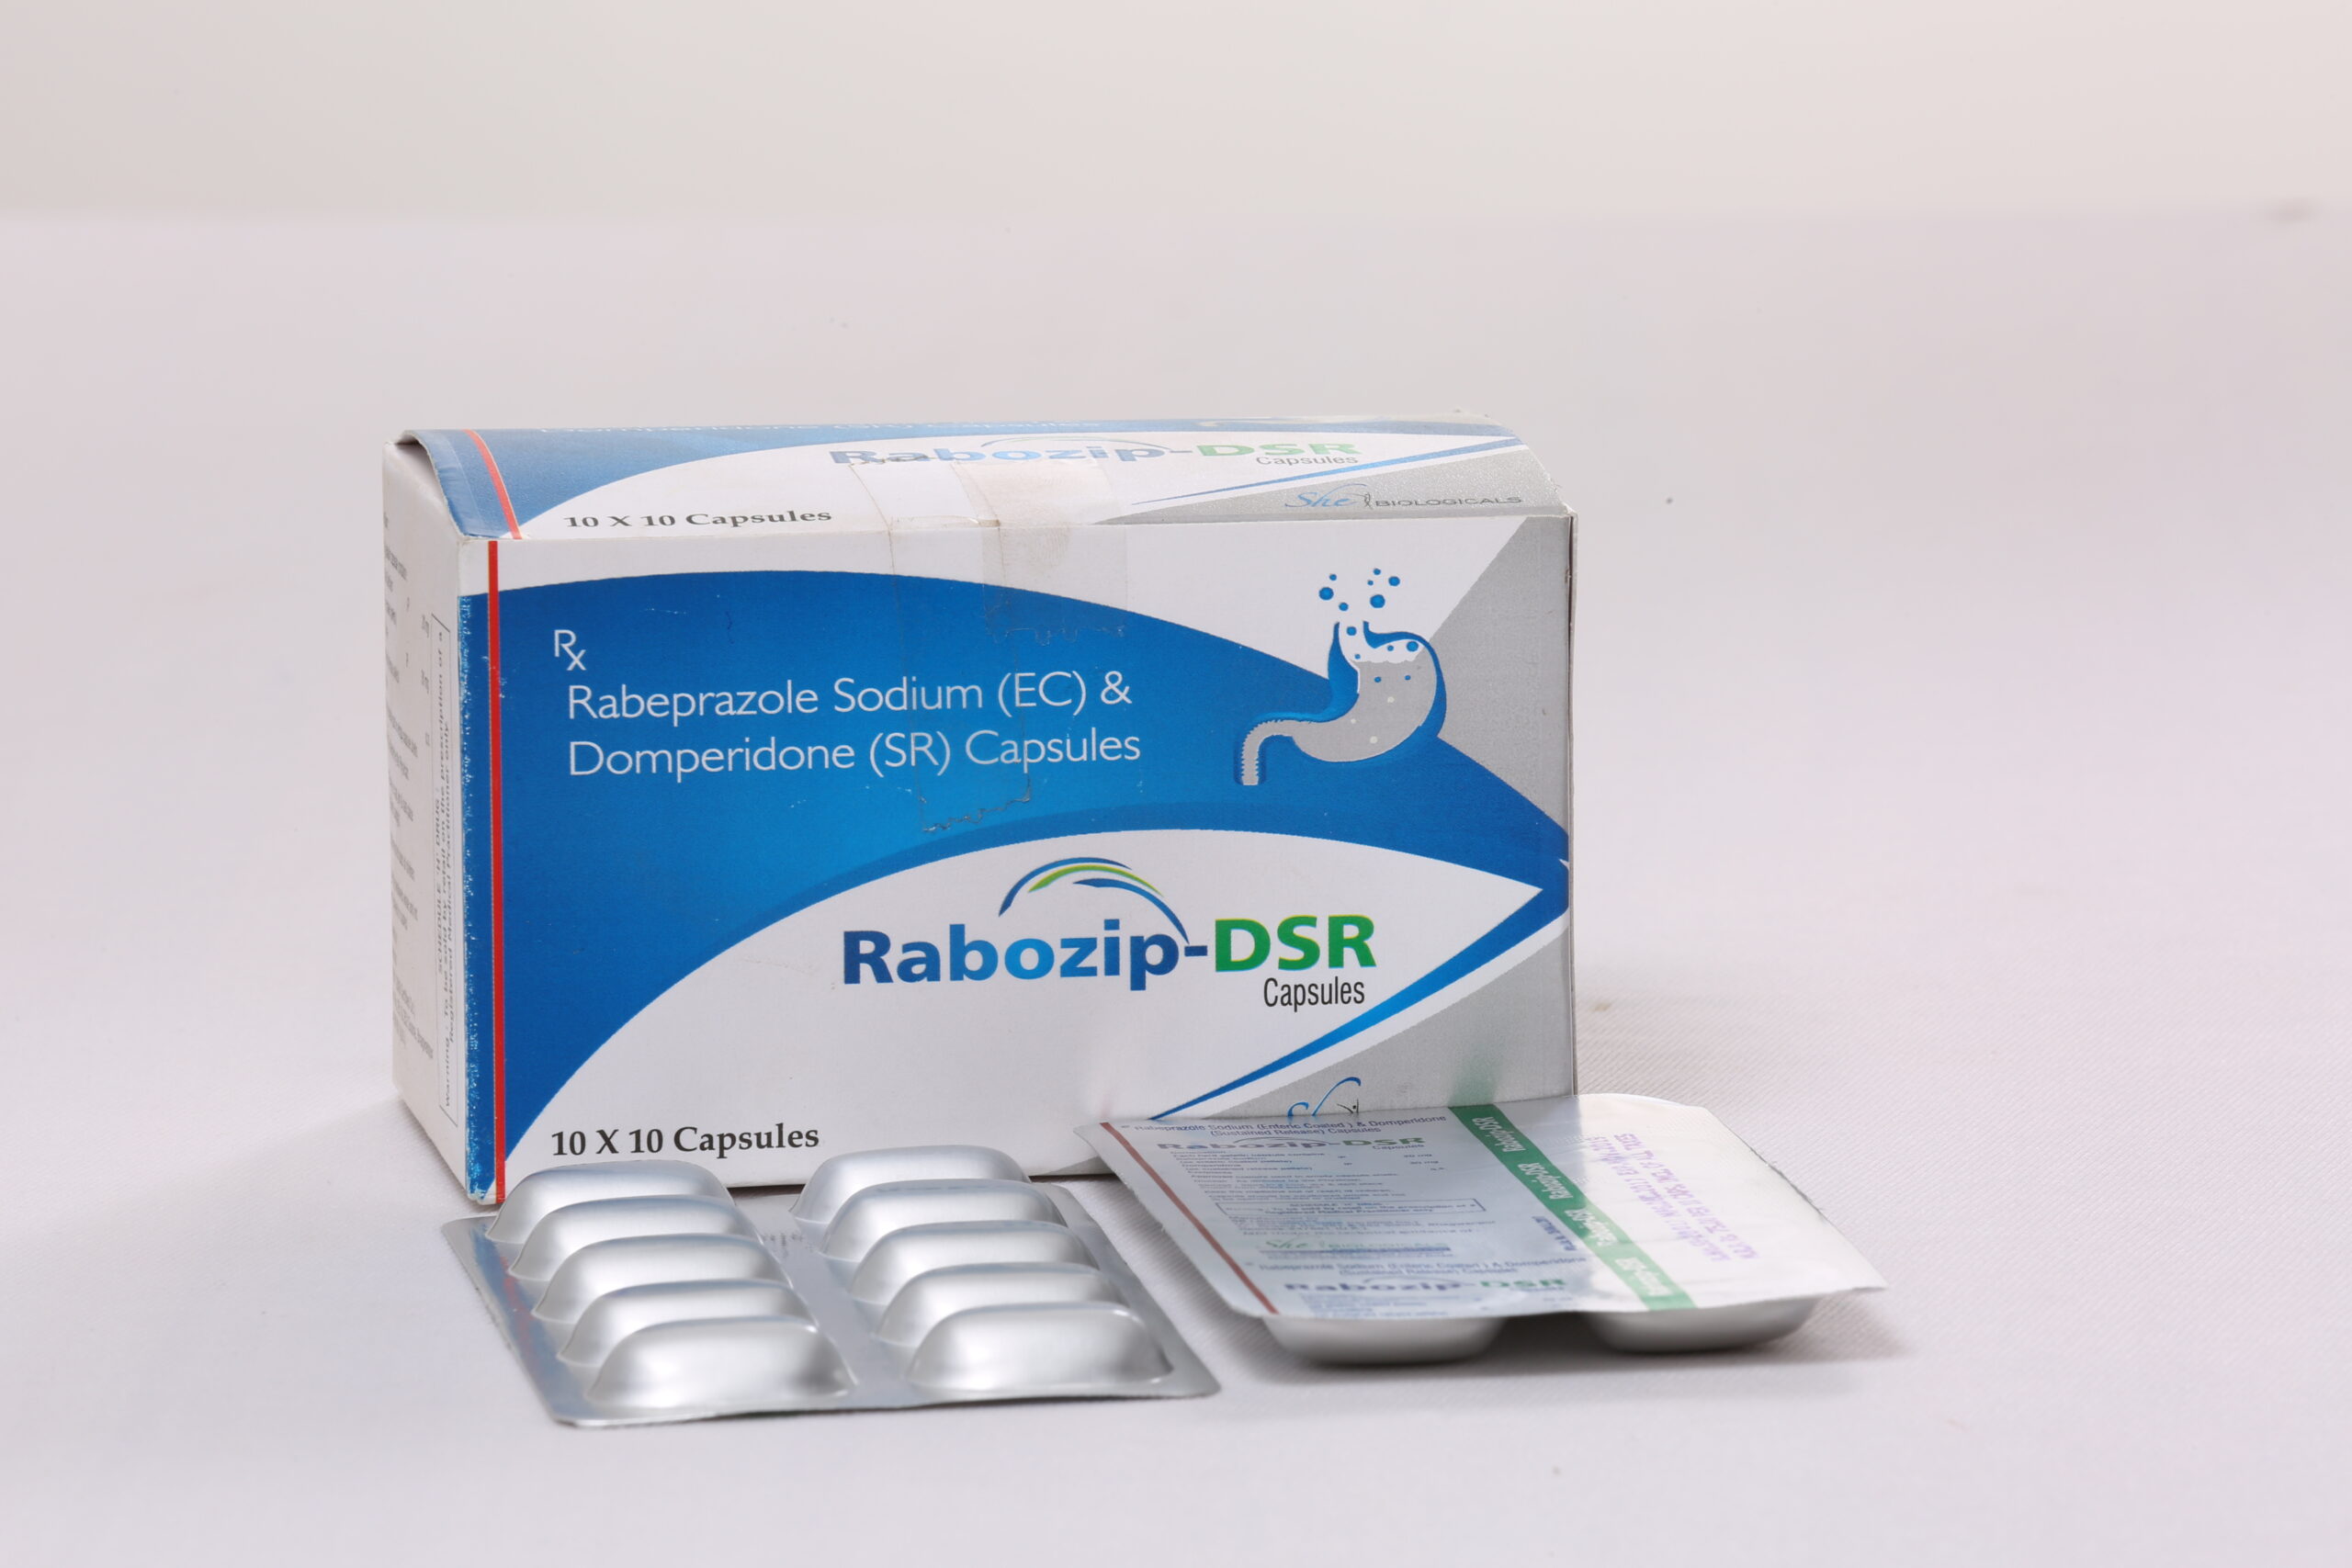 RABOZIP-DSR (Rabeprazole Sodium Domperidone)